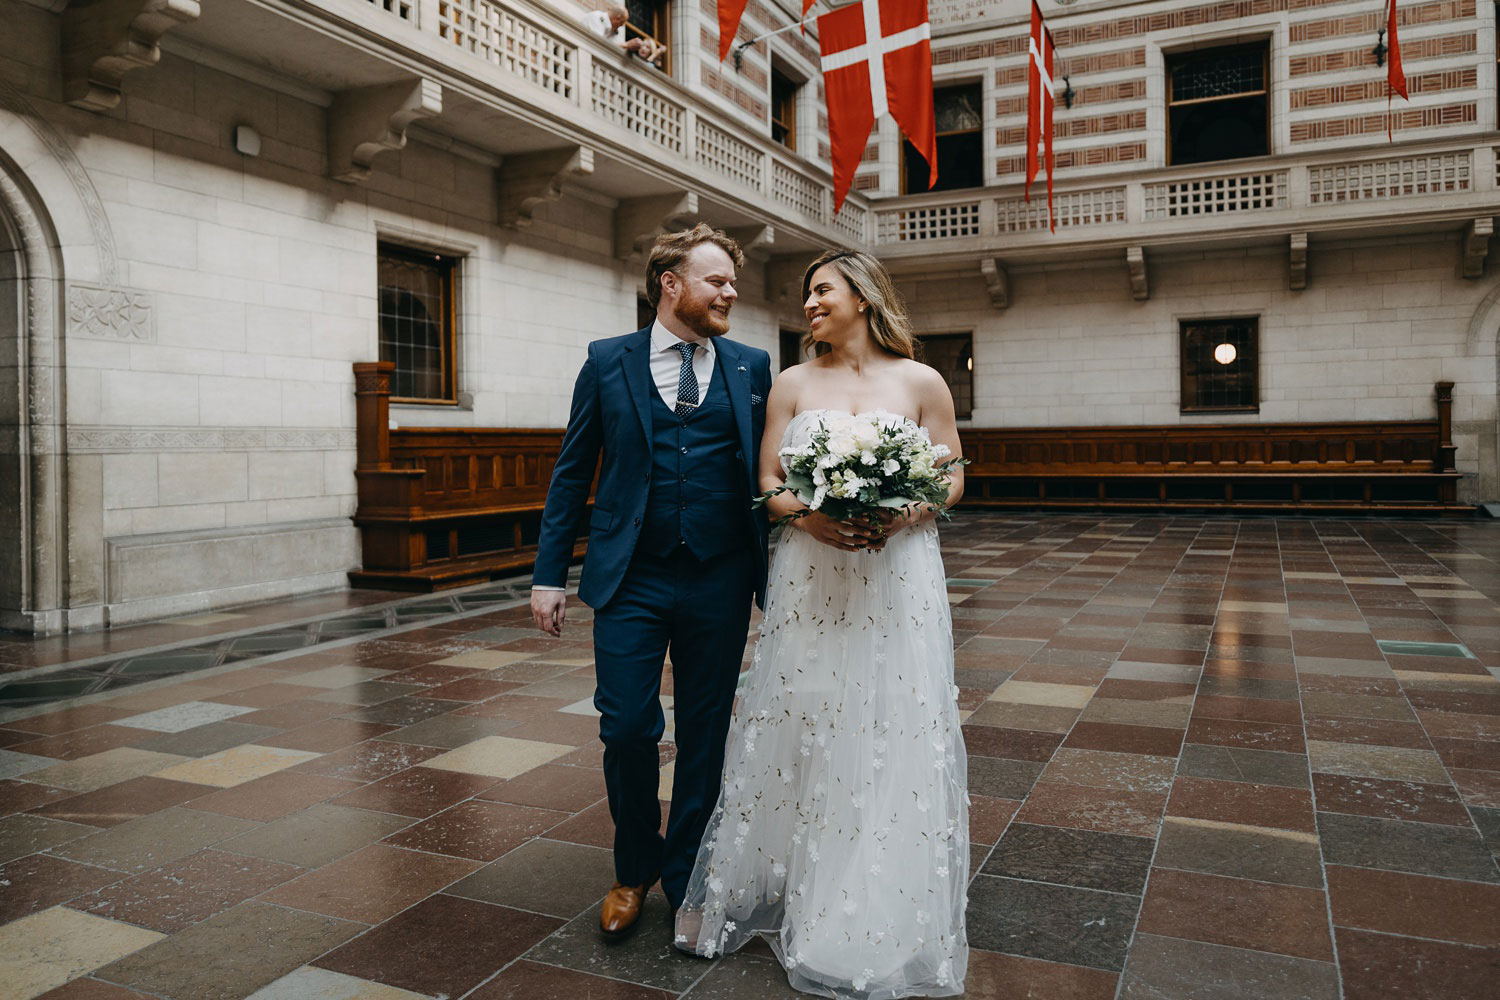 Scenic Copenhagen Venue - Copenhagen City Hall is the Perfect Setting for Weddings